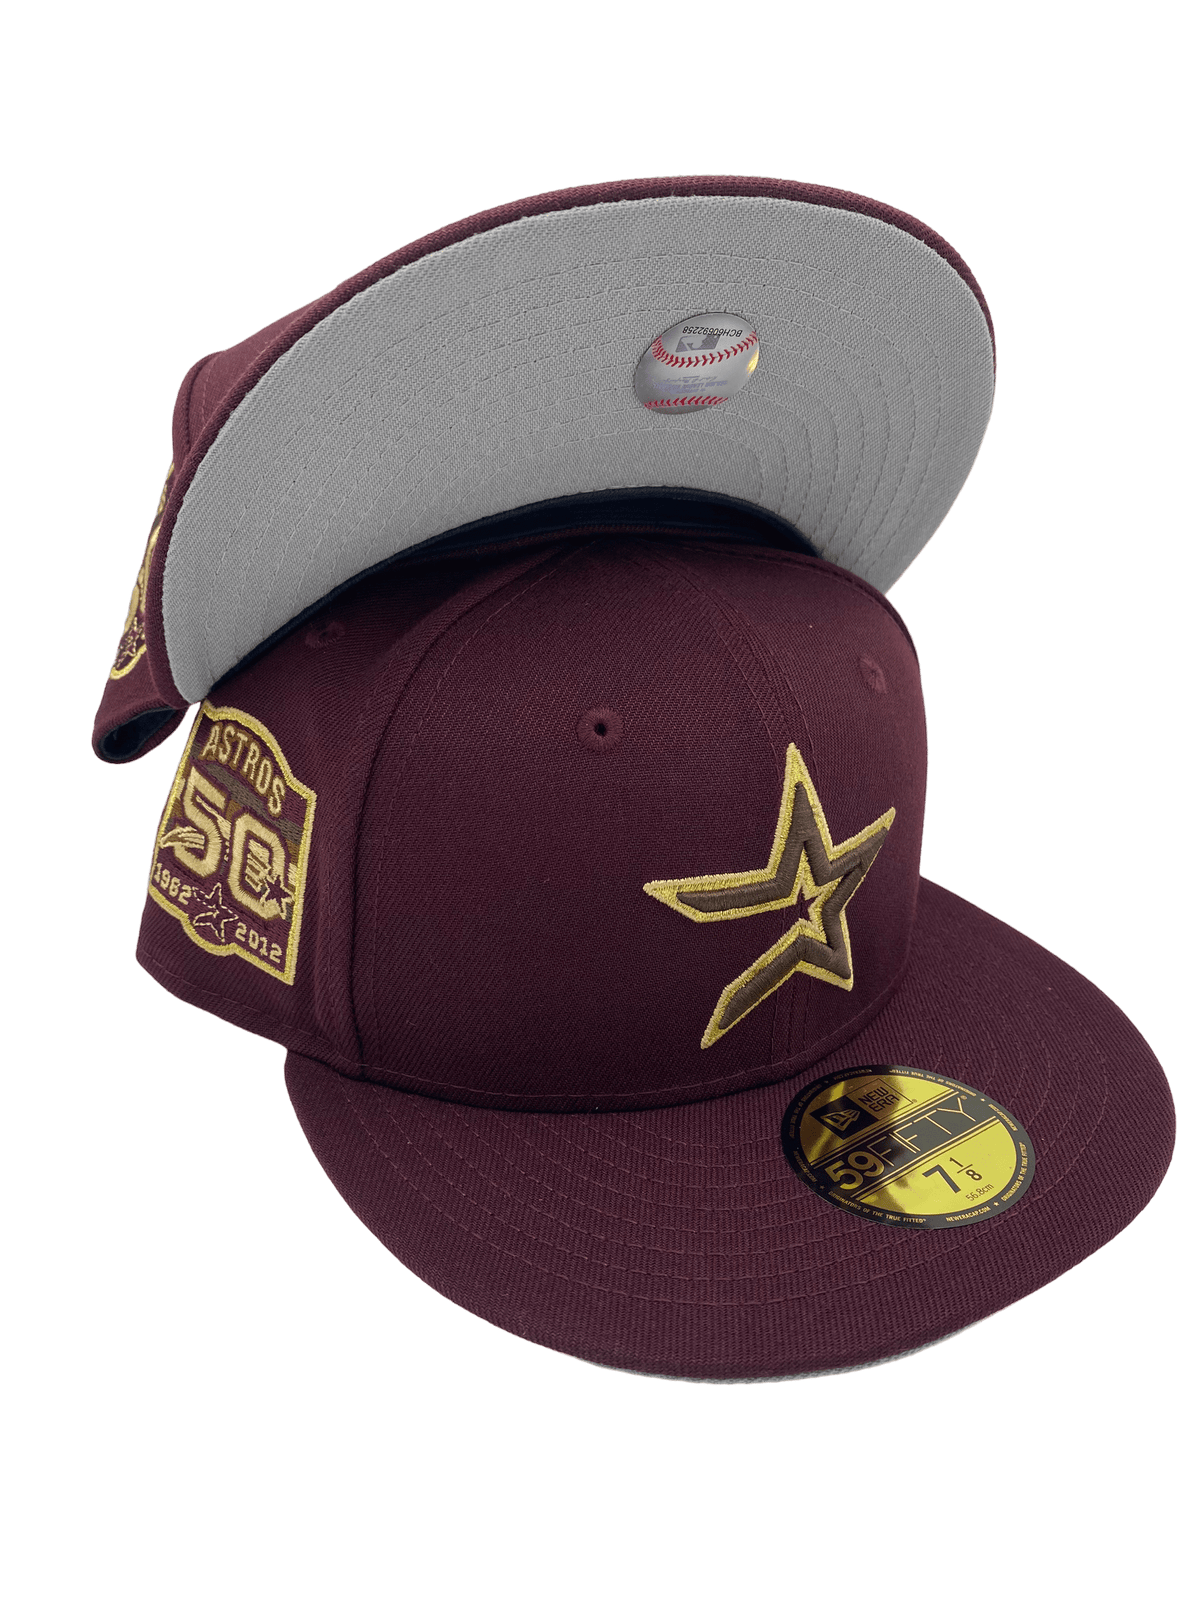 New Era 59 / 50 Hat - Boston Red Sox - Gold / Purple 7 1/2